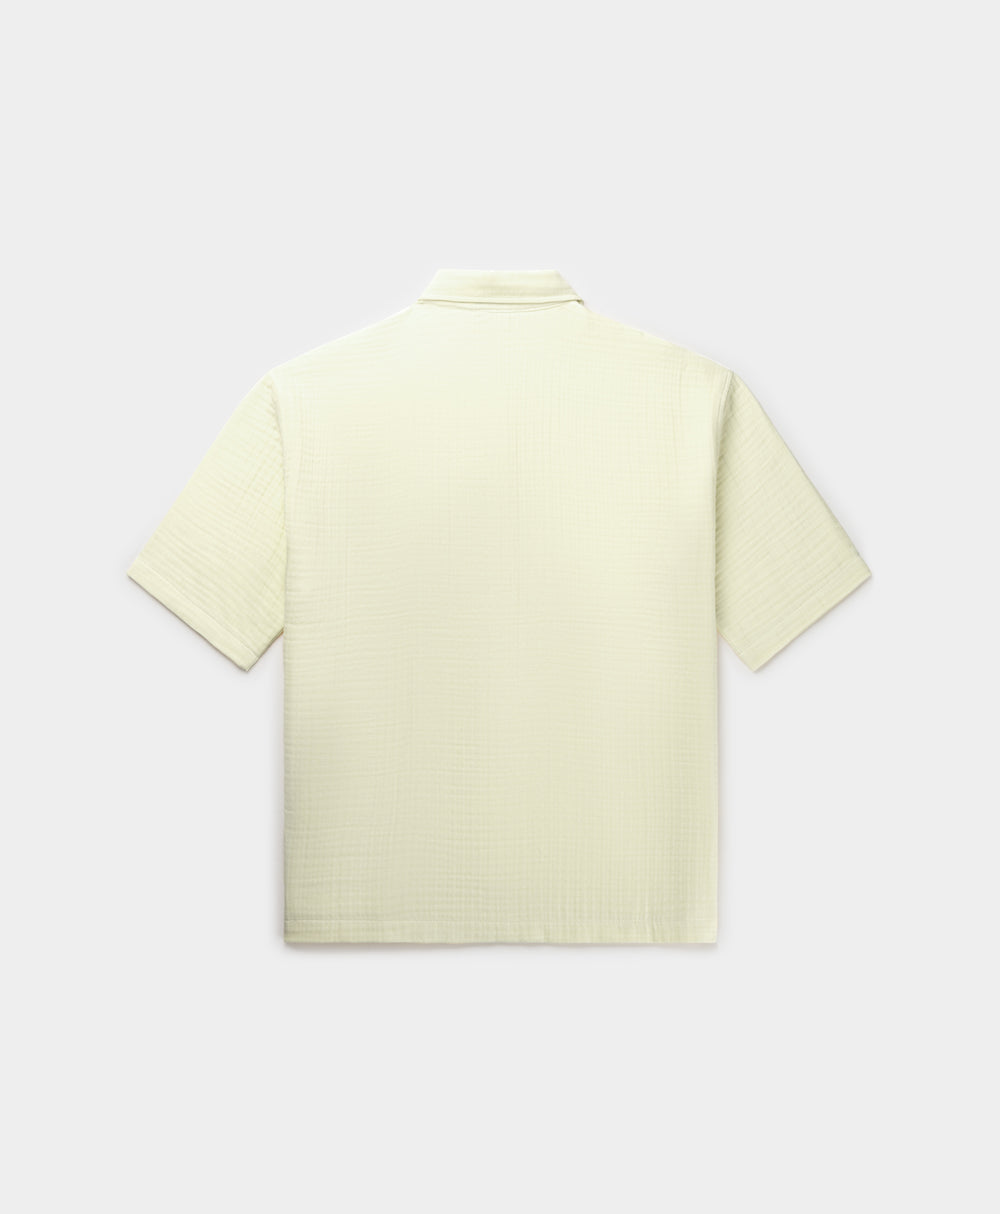 DP - Icing Yellow Enzi Seersucker Shirt - Packshot - Rear